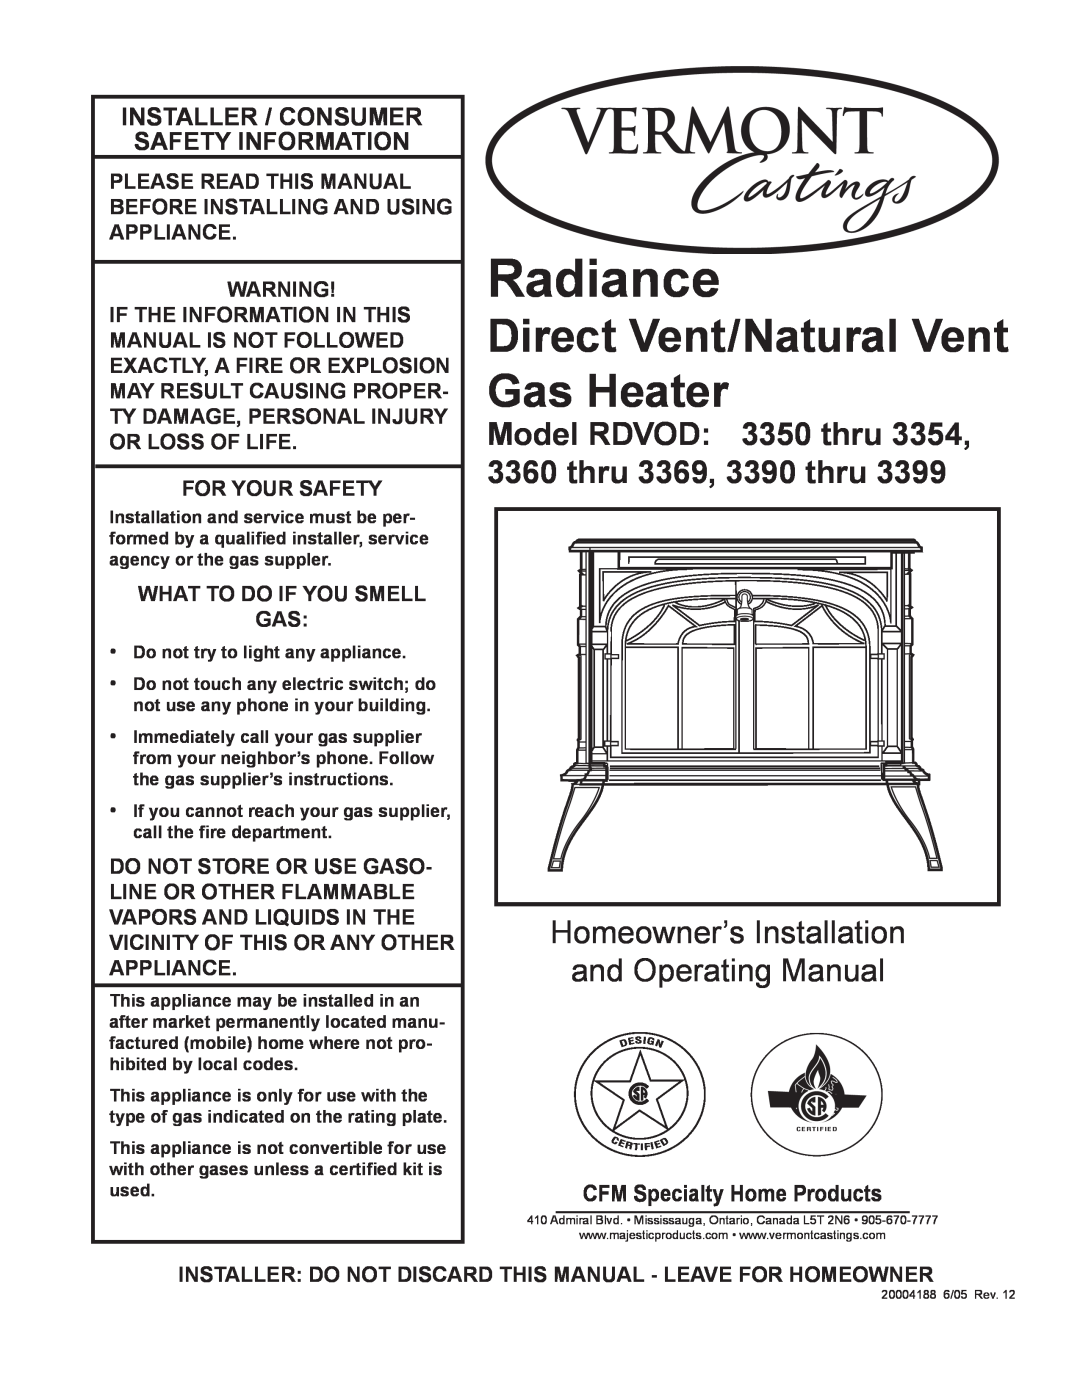 Vermont Casting RDVOD 3354 manual Model RDVOD 3350 thru, thru 3369, 3390 thru, Radiance, CFM Specialty Home Products 